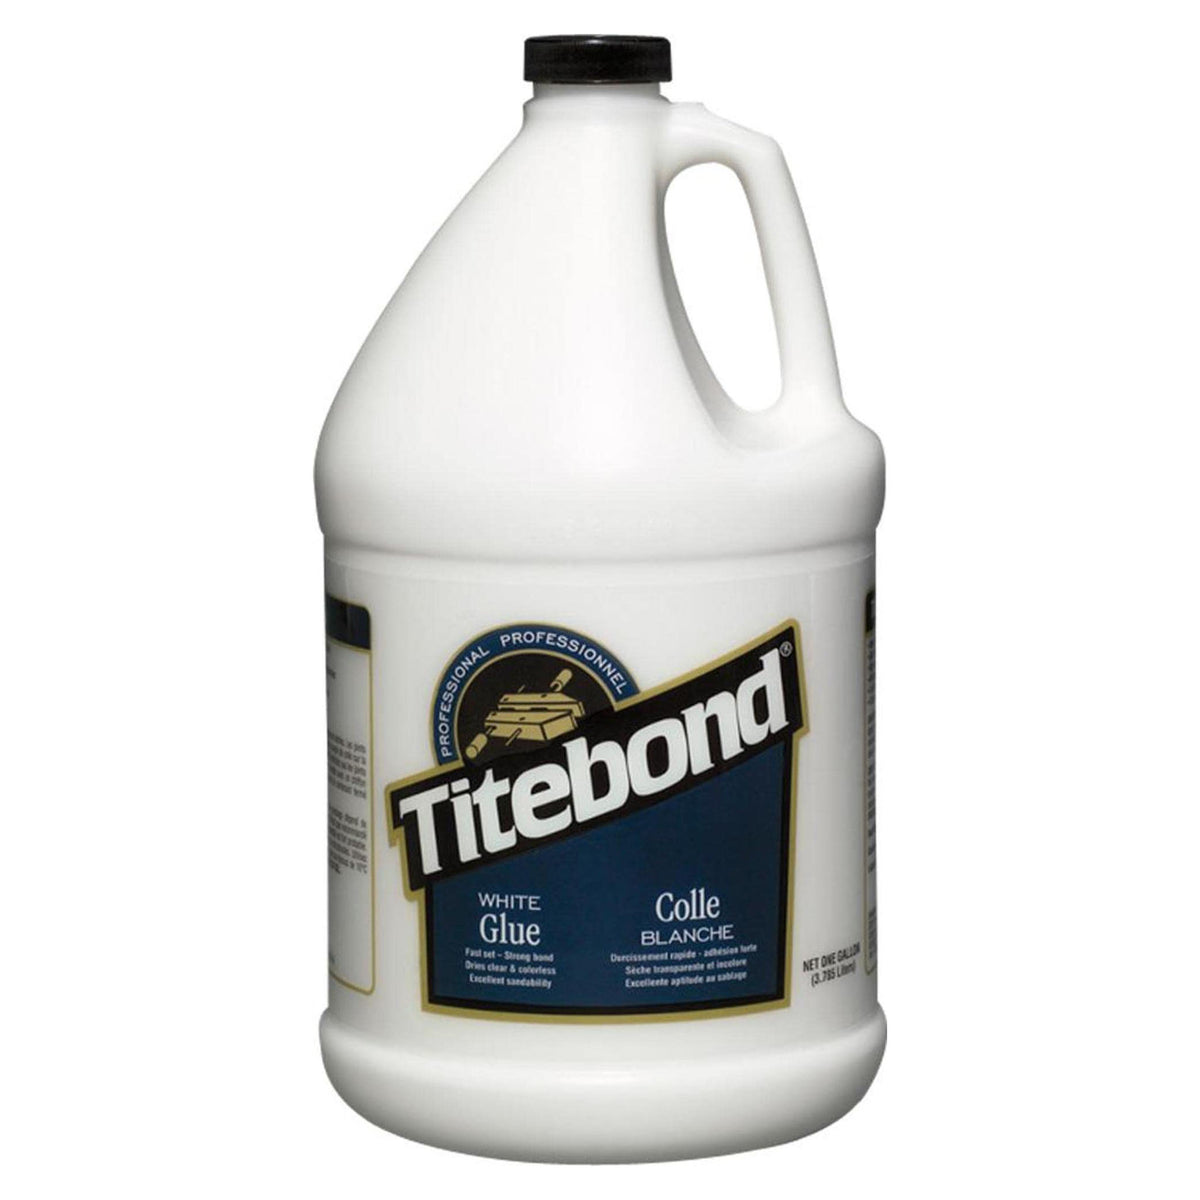 Titebond Instant Bond Adhesive (Gel) - 2 oz, 6231 (Franklin